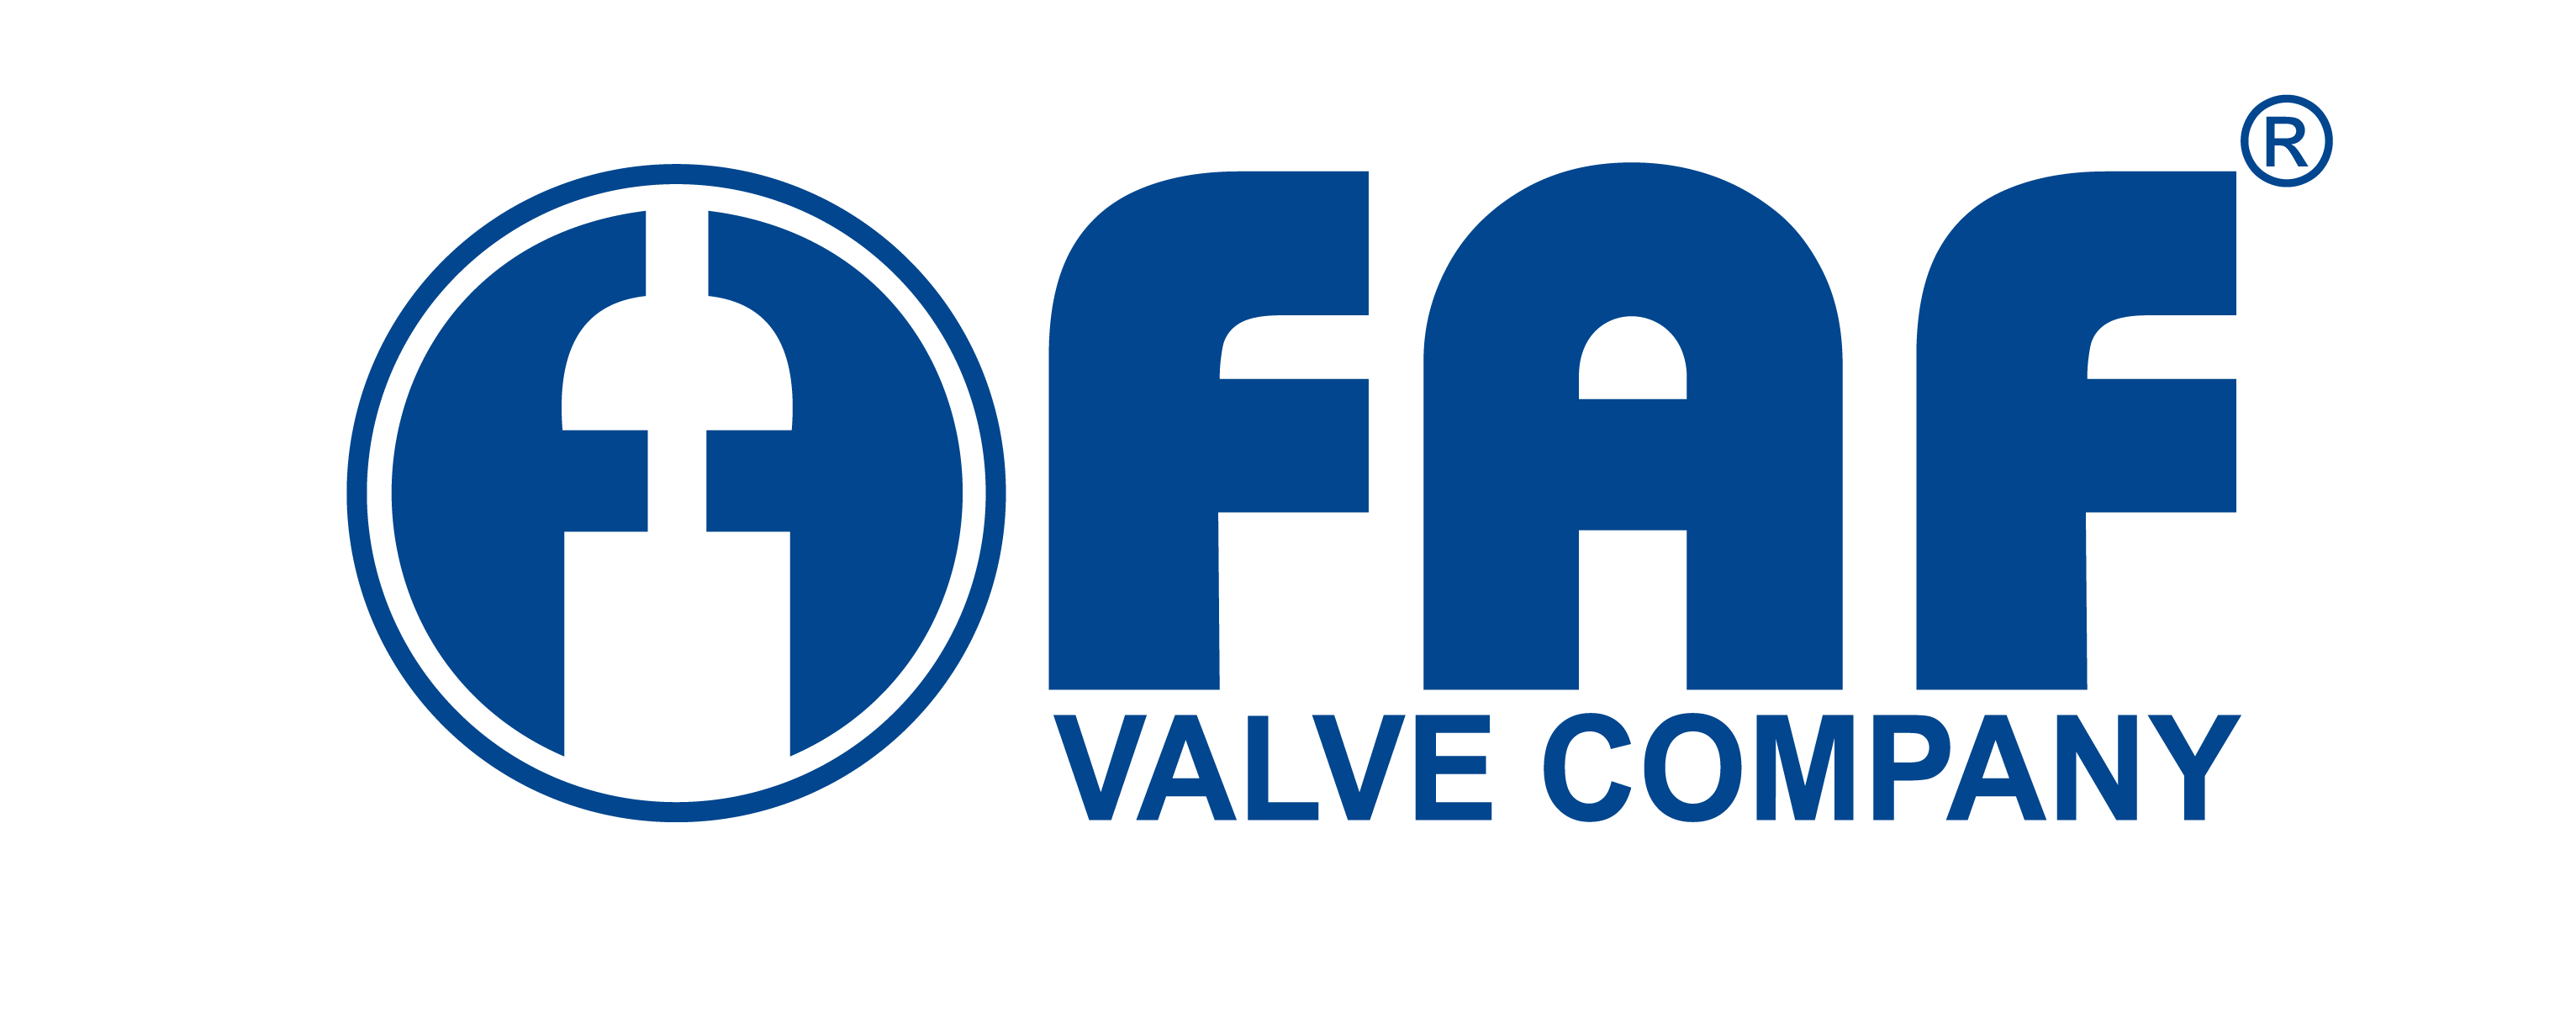 Ариэль пласткомплект. Логотип фирм производителей трубопроводной арматуры. Фаф вана Санайи логотип. FAF. Запорная арматура фаф.